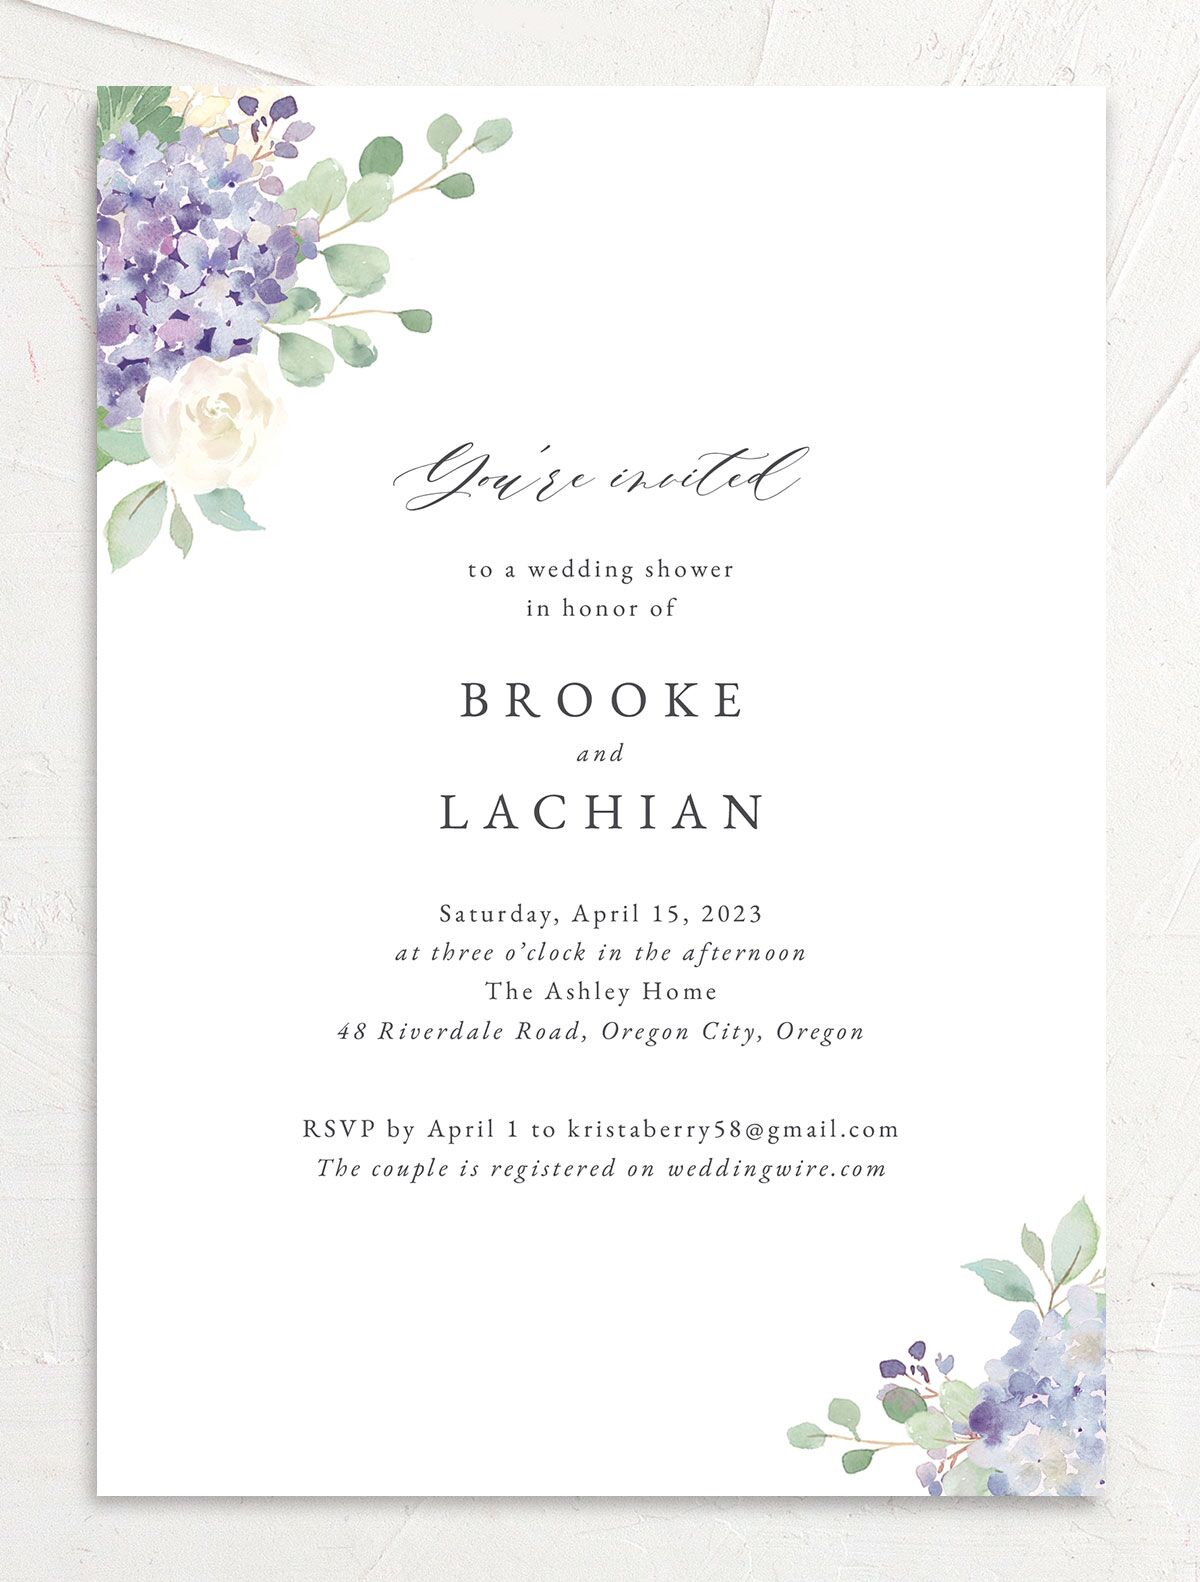 Watercolor Hydrangea Bridal Shower Invitations front in Lilac